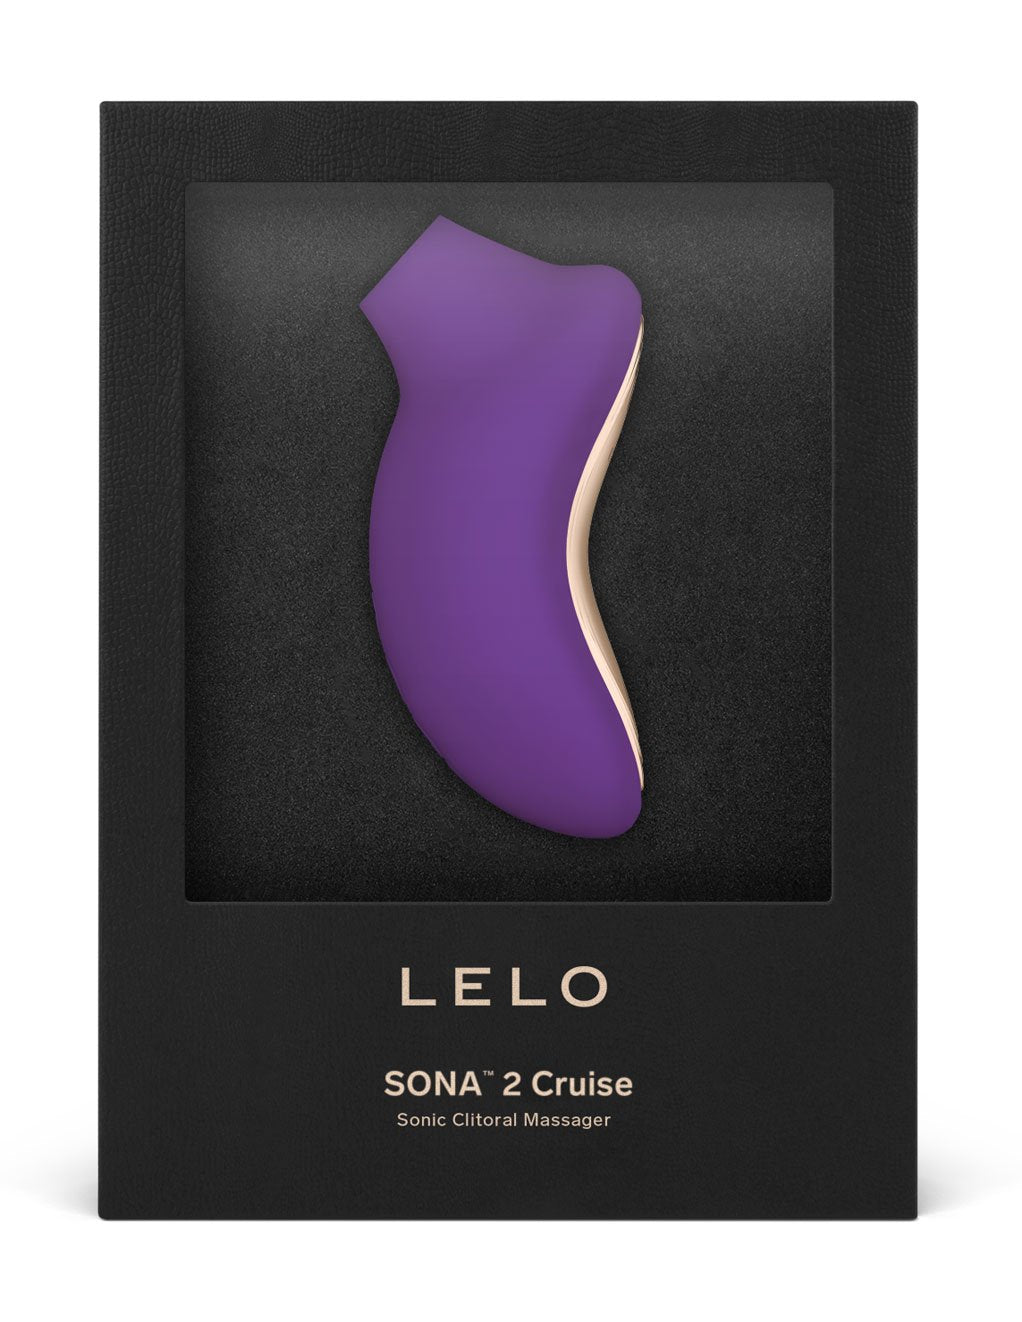 Lelo Sona Cruise 2 Sonic Clitoral Massager- Purple- Box